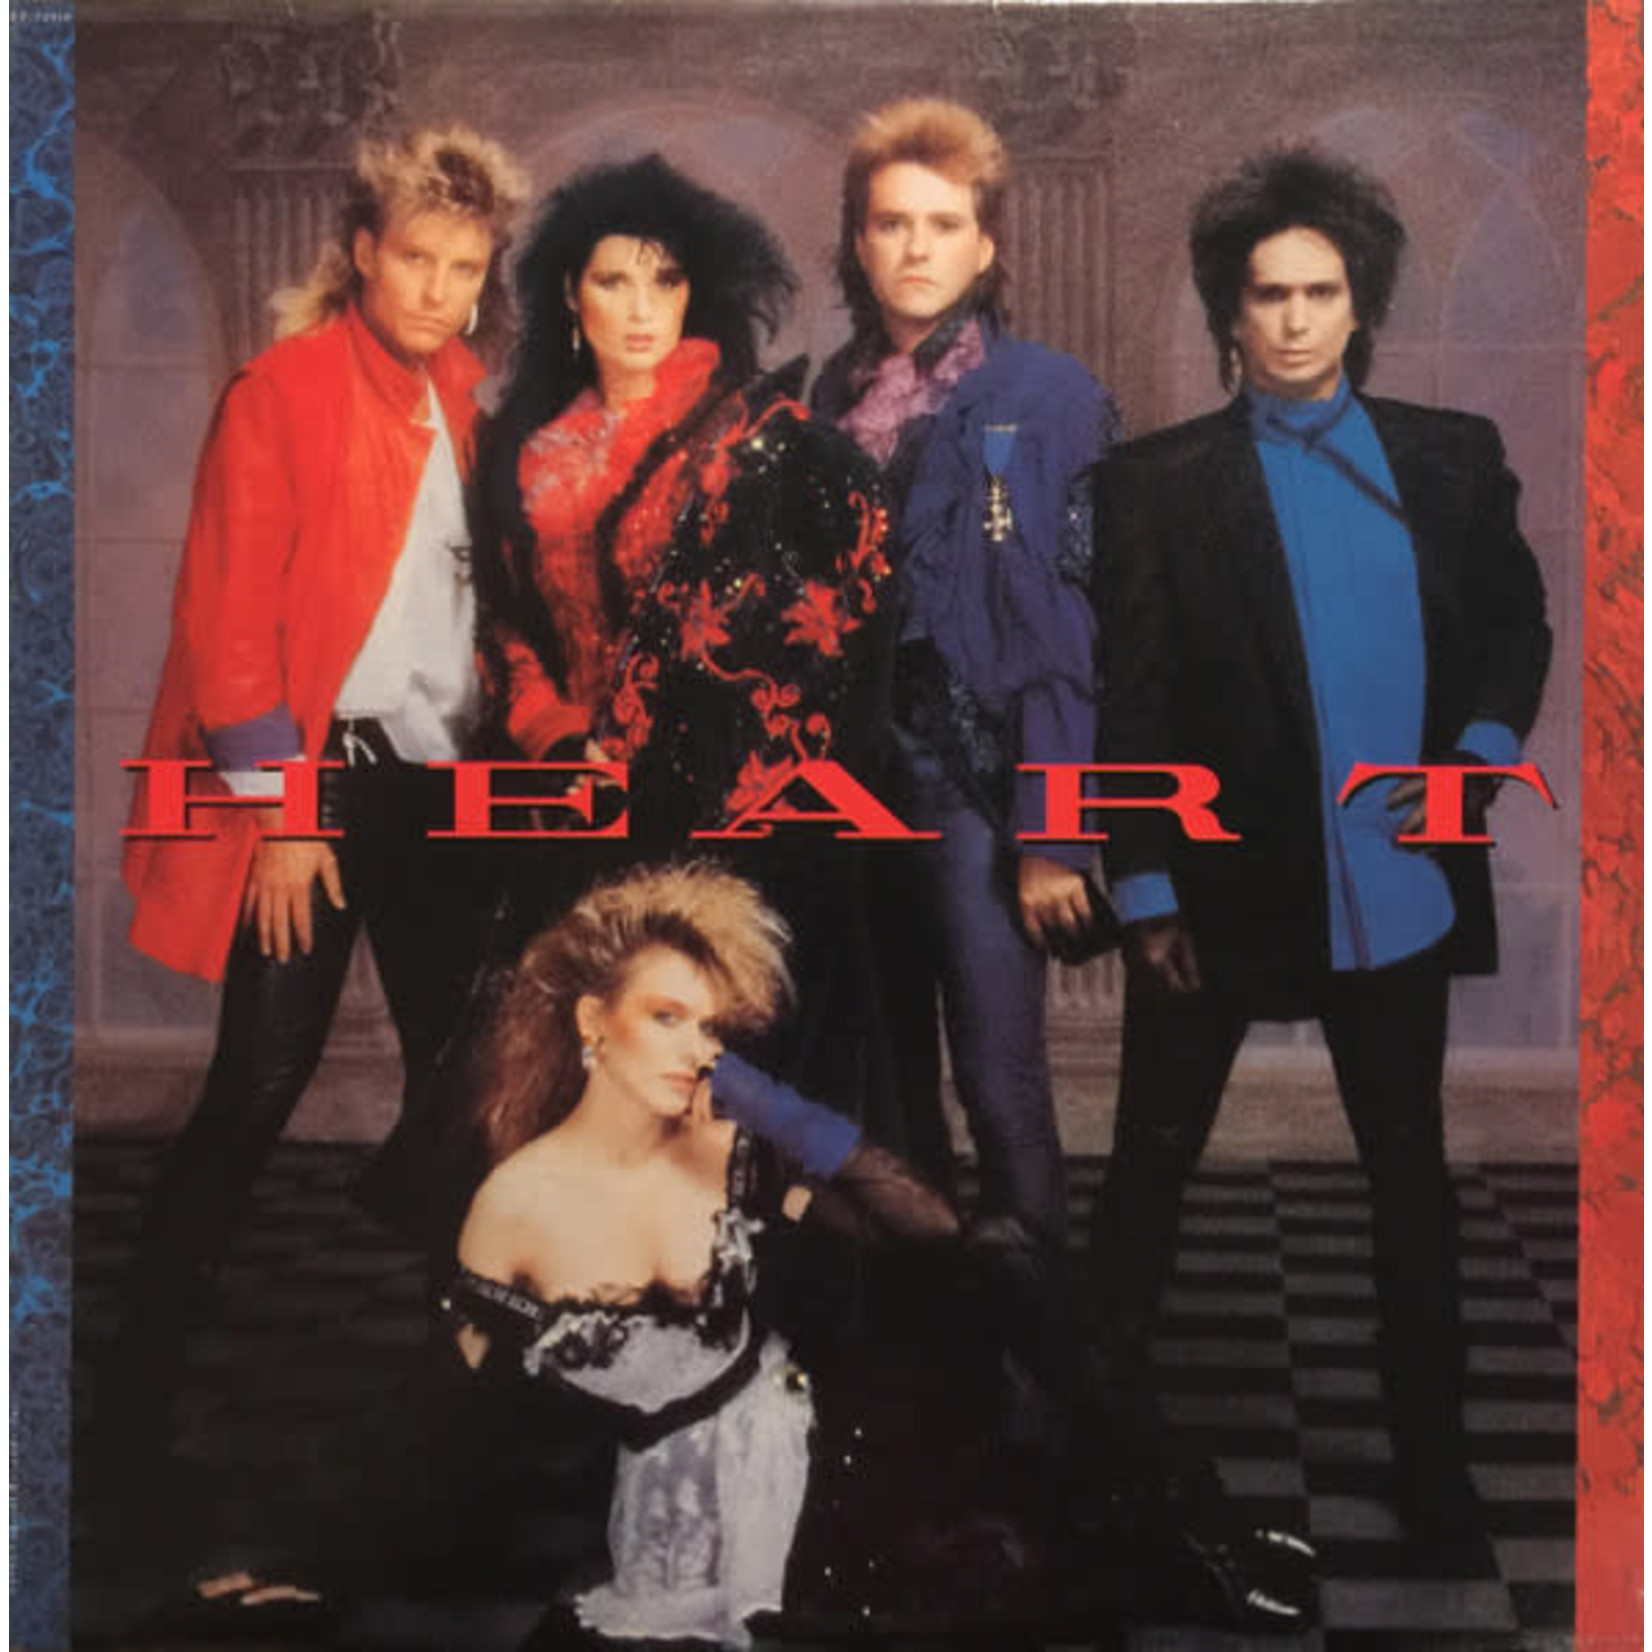 Heart Heart – Heart (VG, 1985, LP, Capitol Records – ST-512410, Canada)